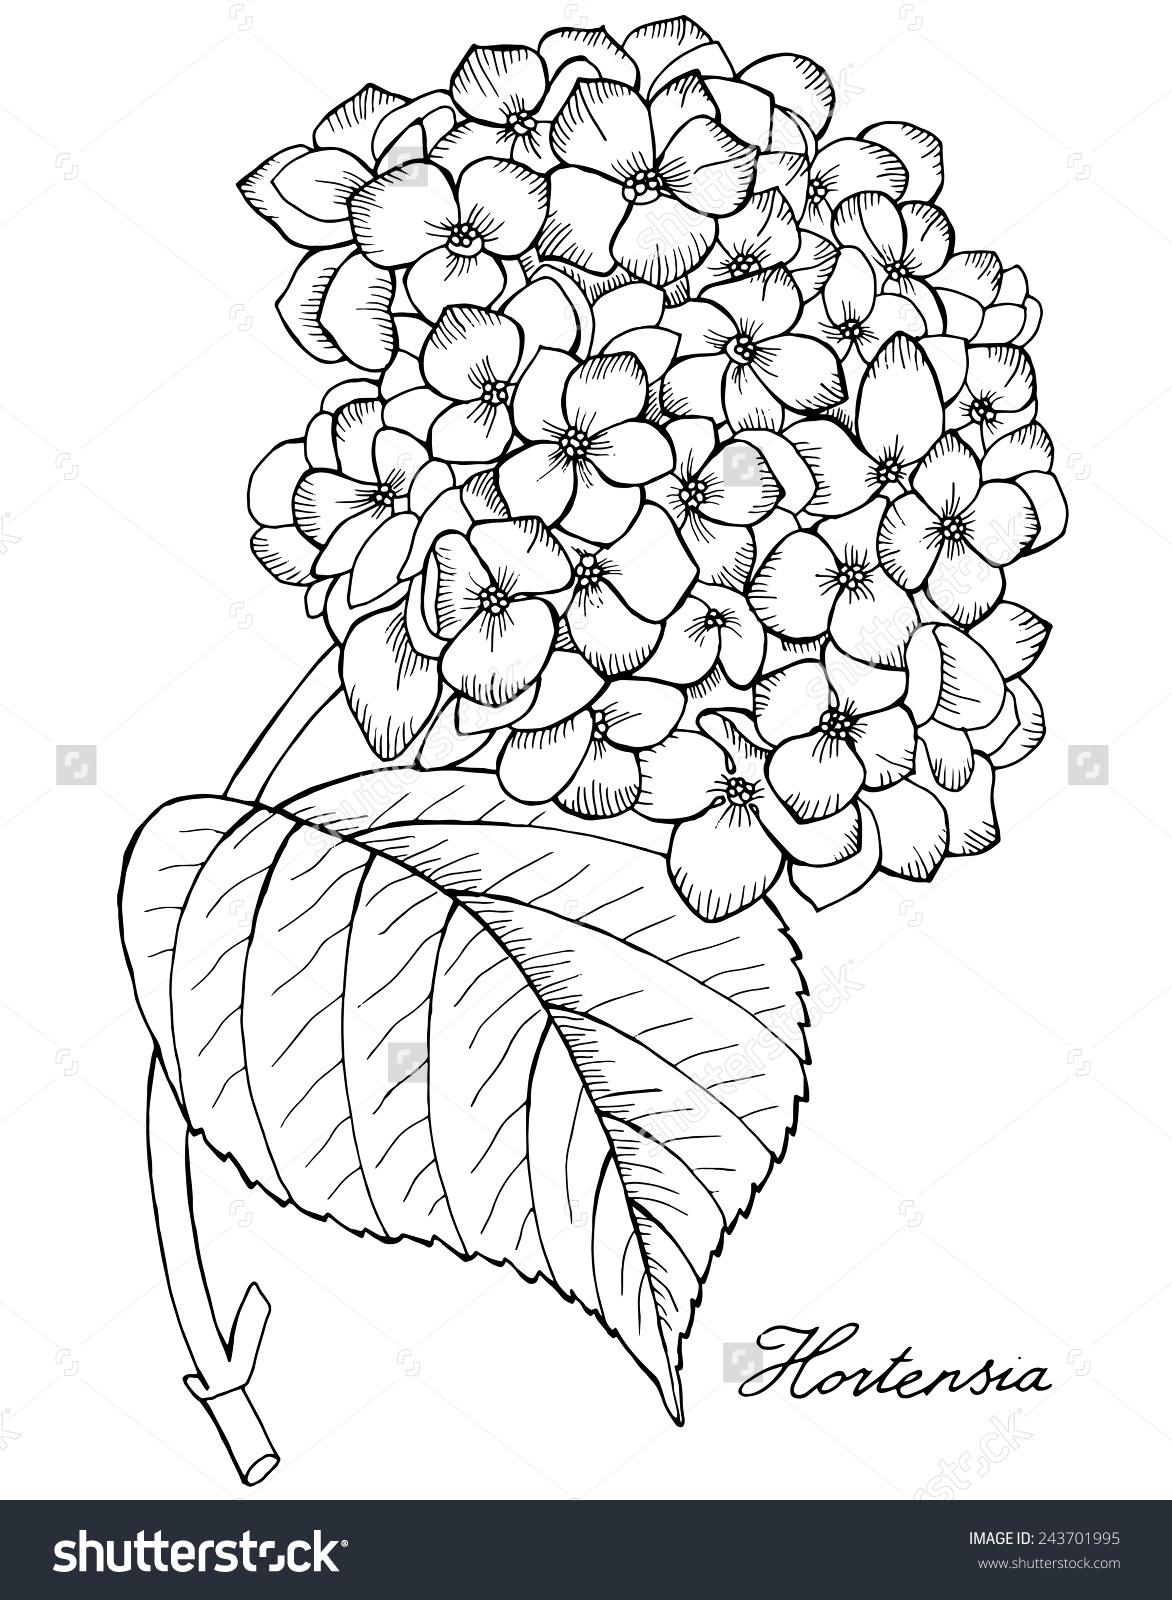 Hortensia Hydrangea Black White Stock Vector 243701995.